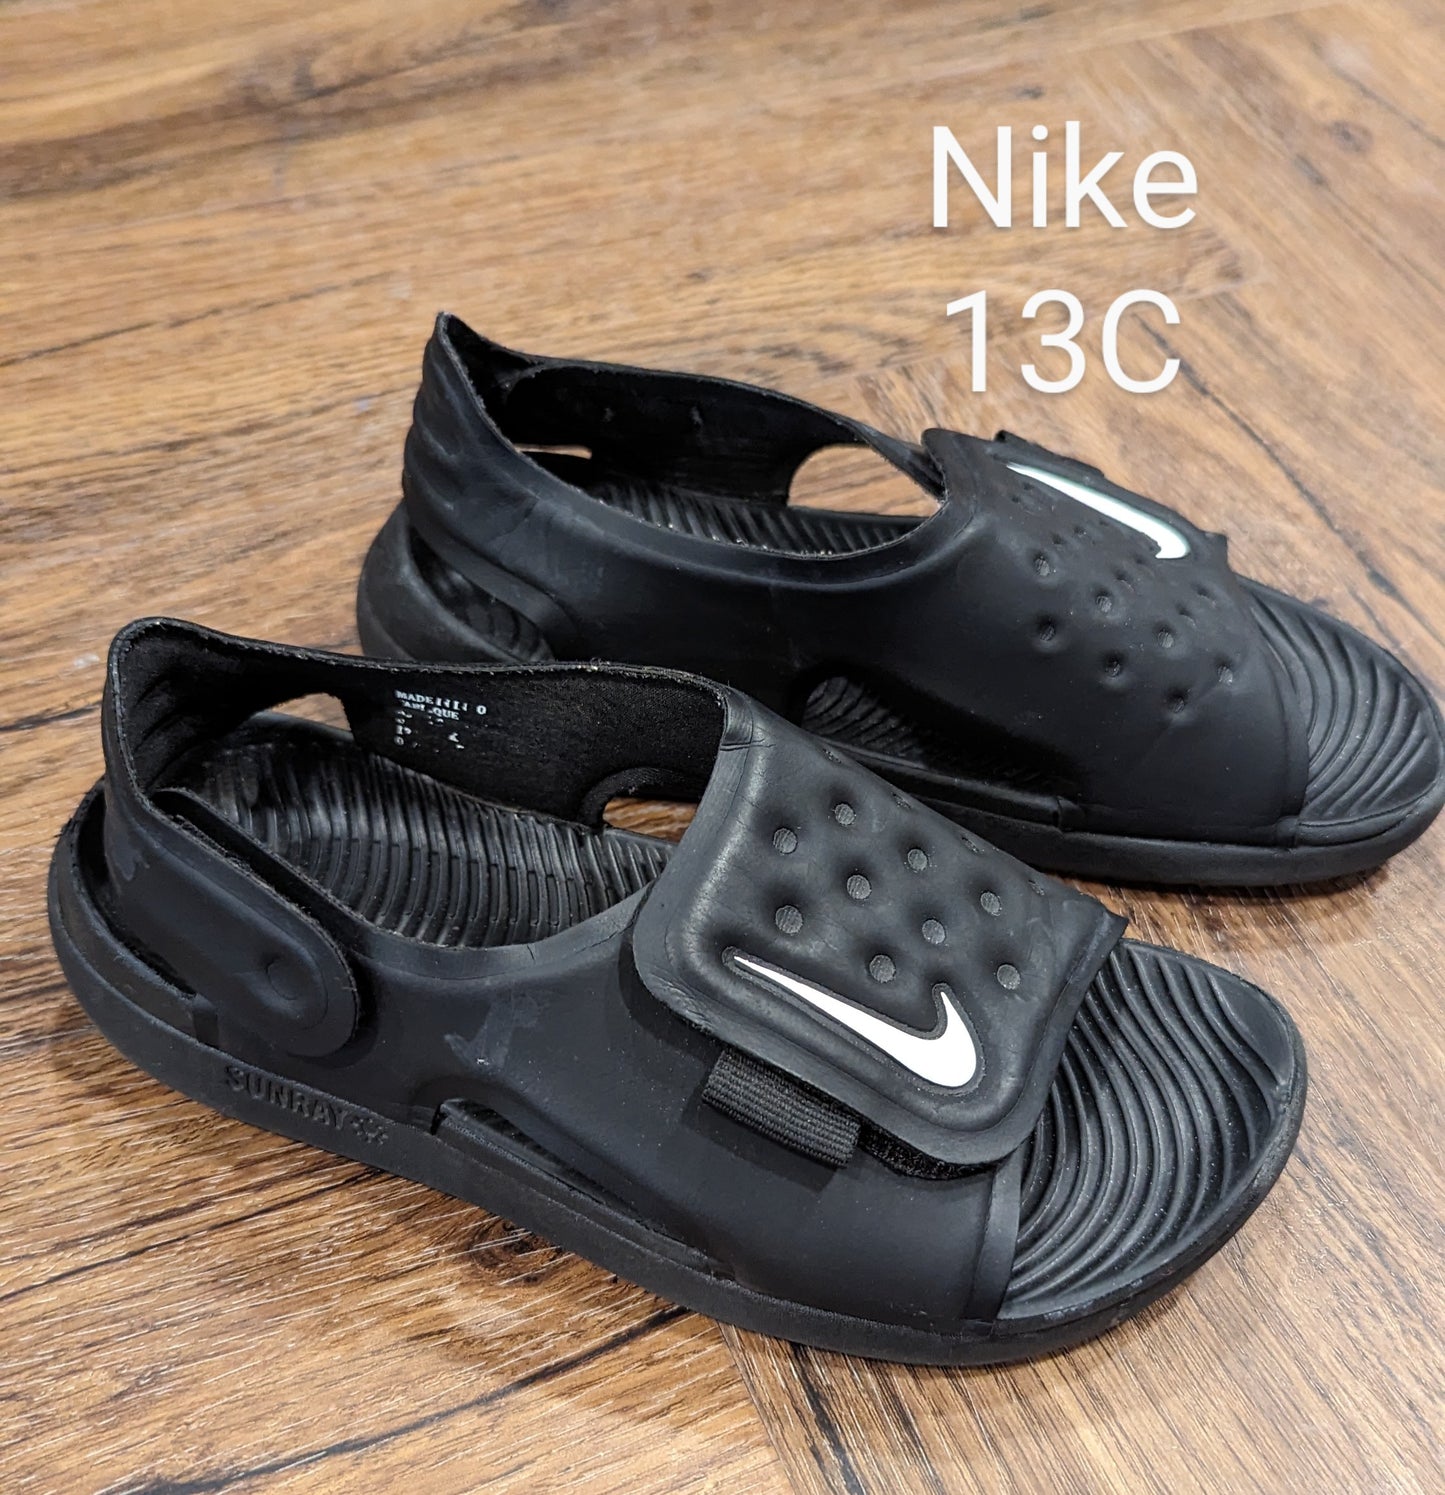 Nike Black sandals, 13c